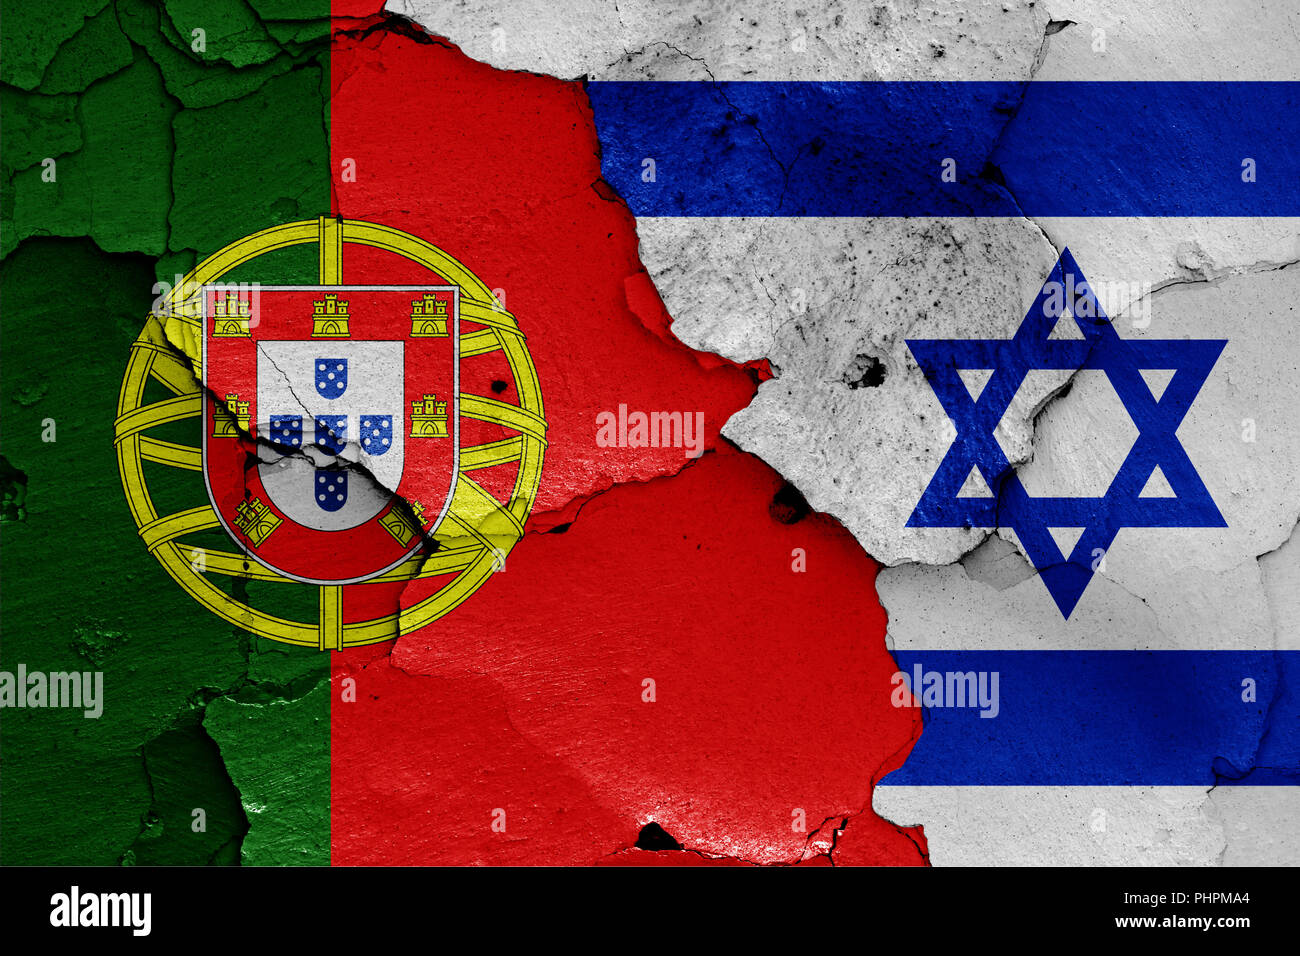 Portugal vs israel